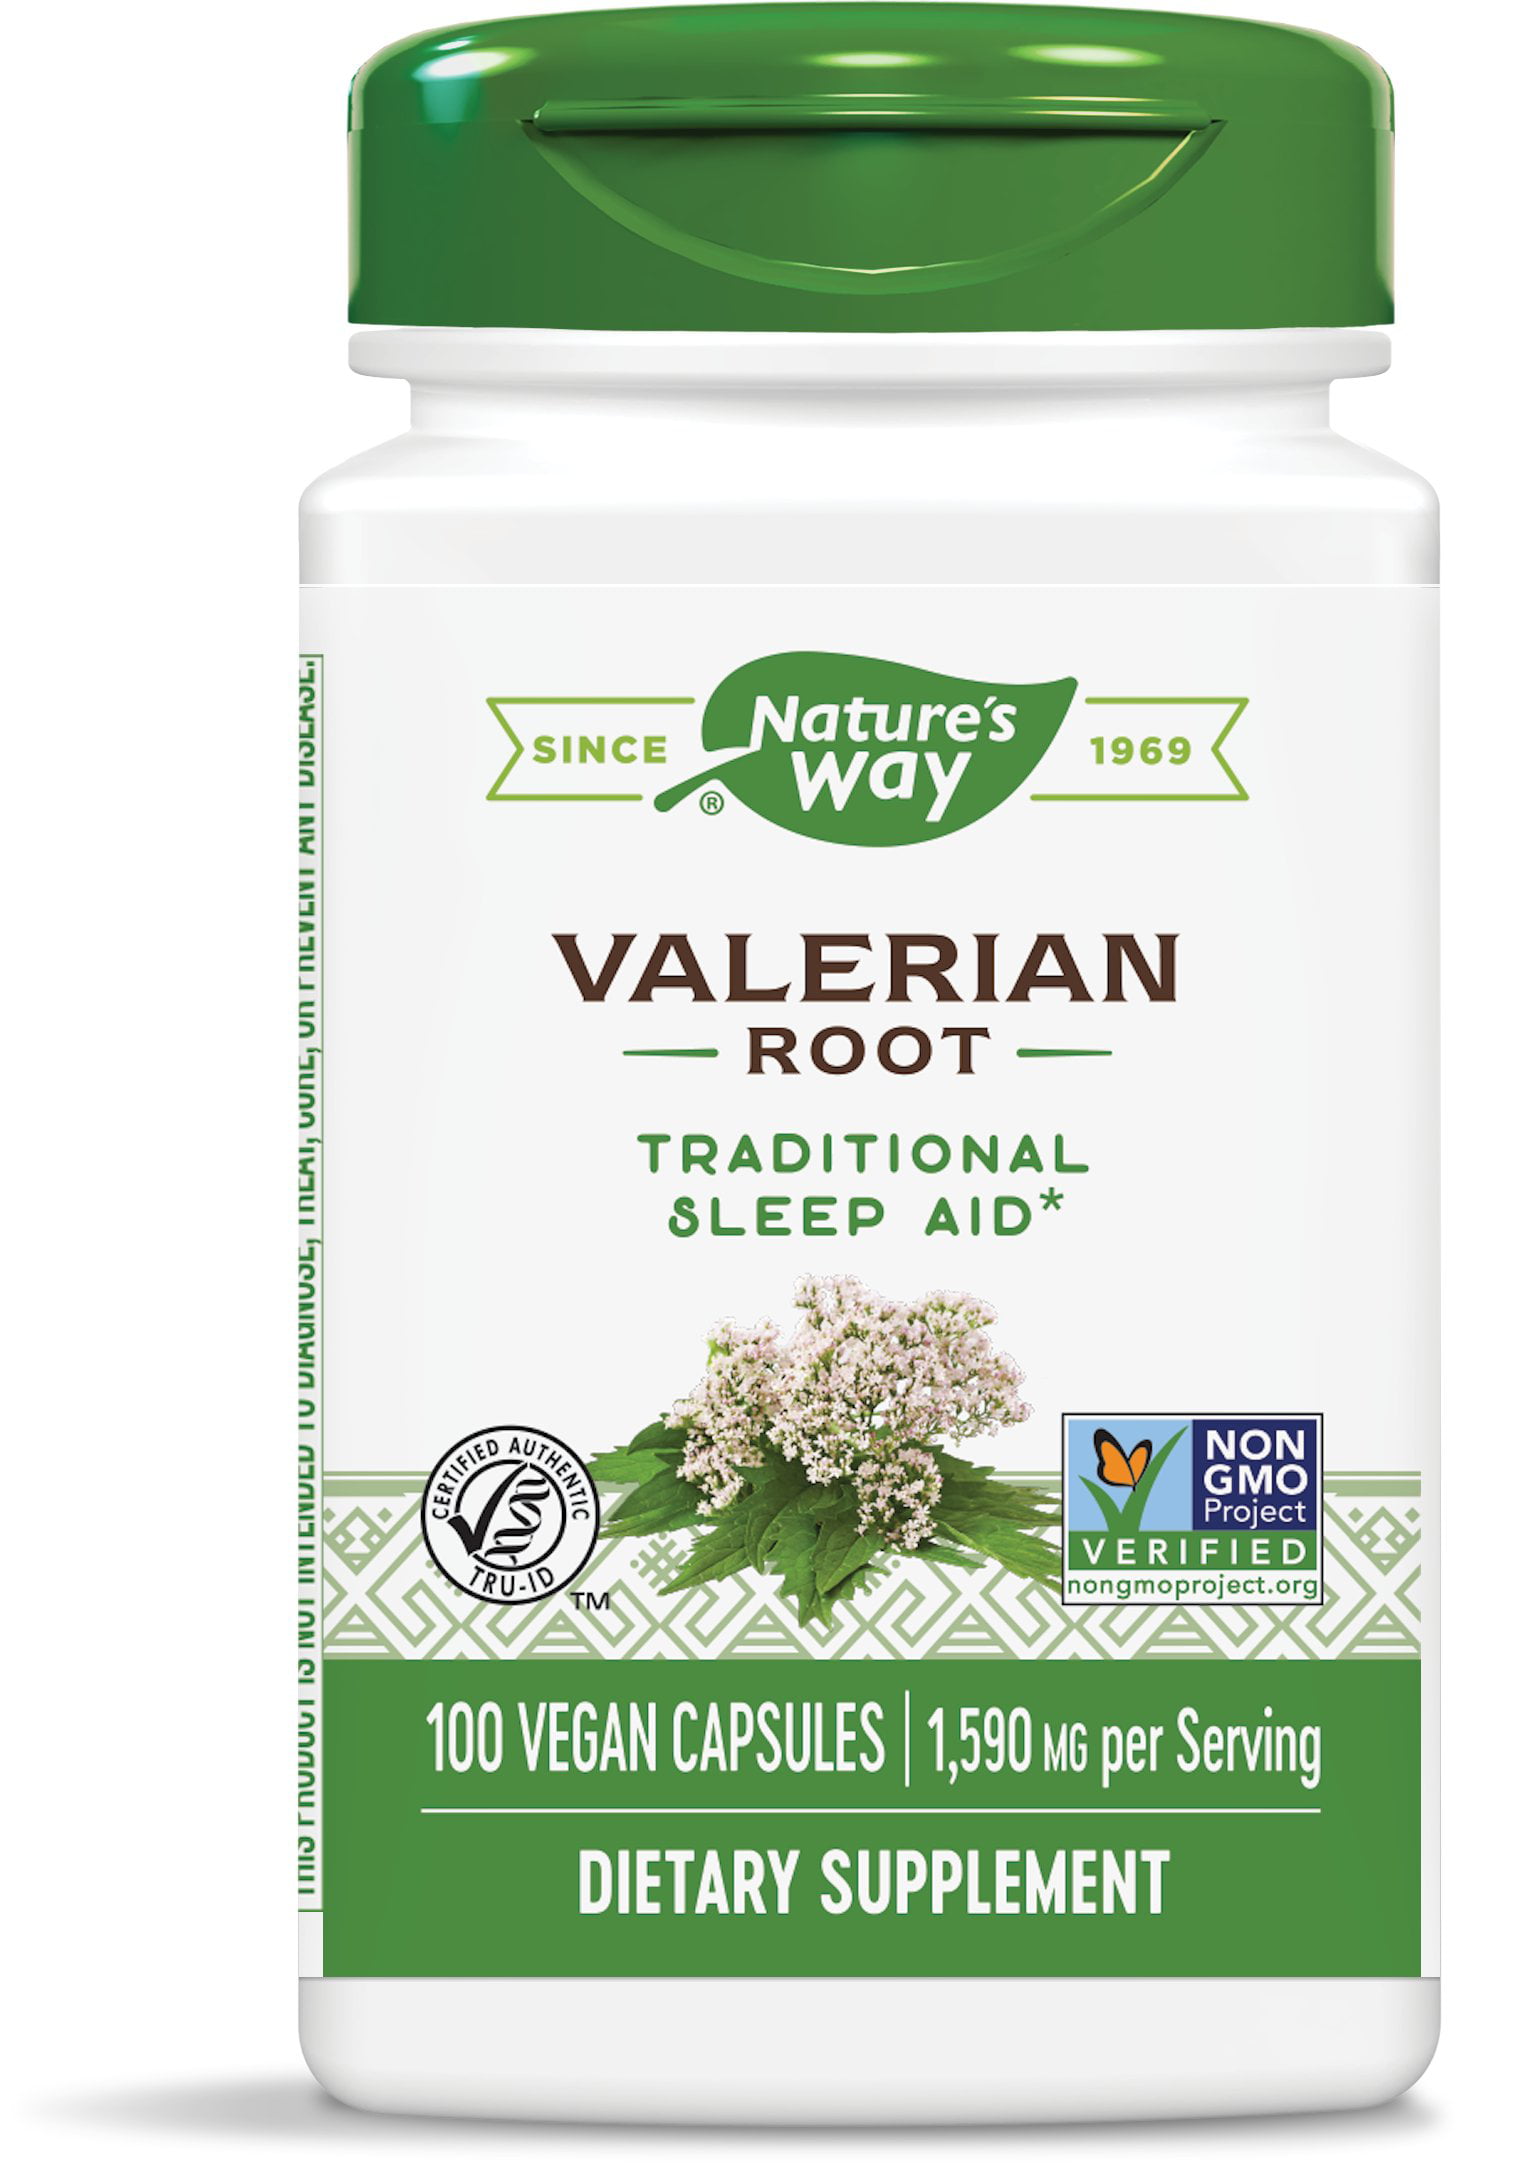 valerian root for sleep